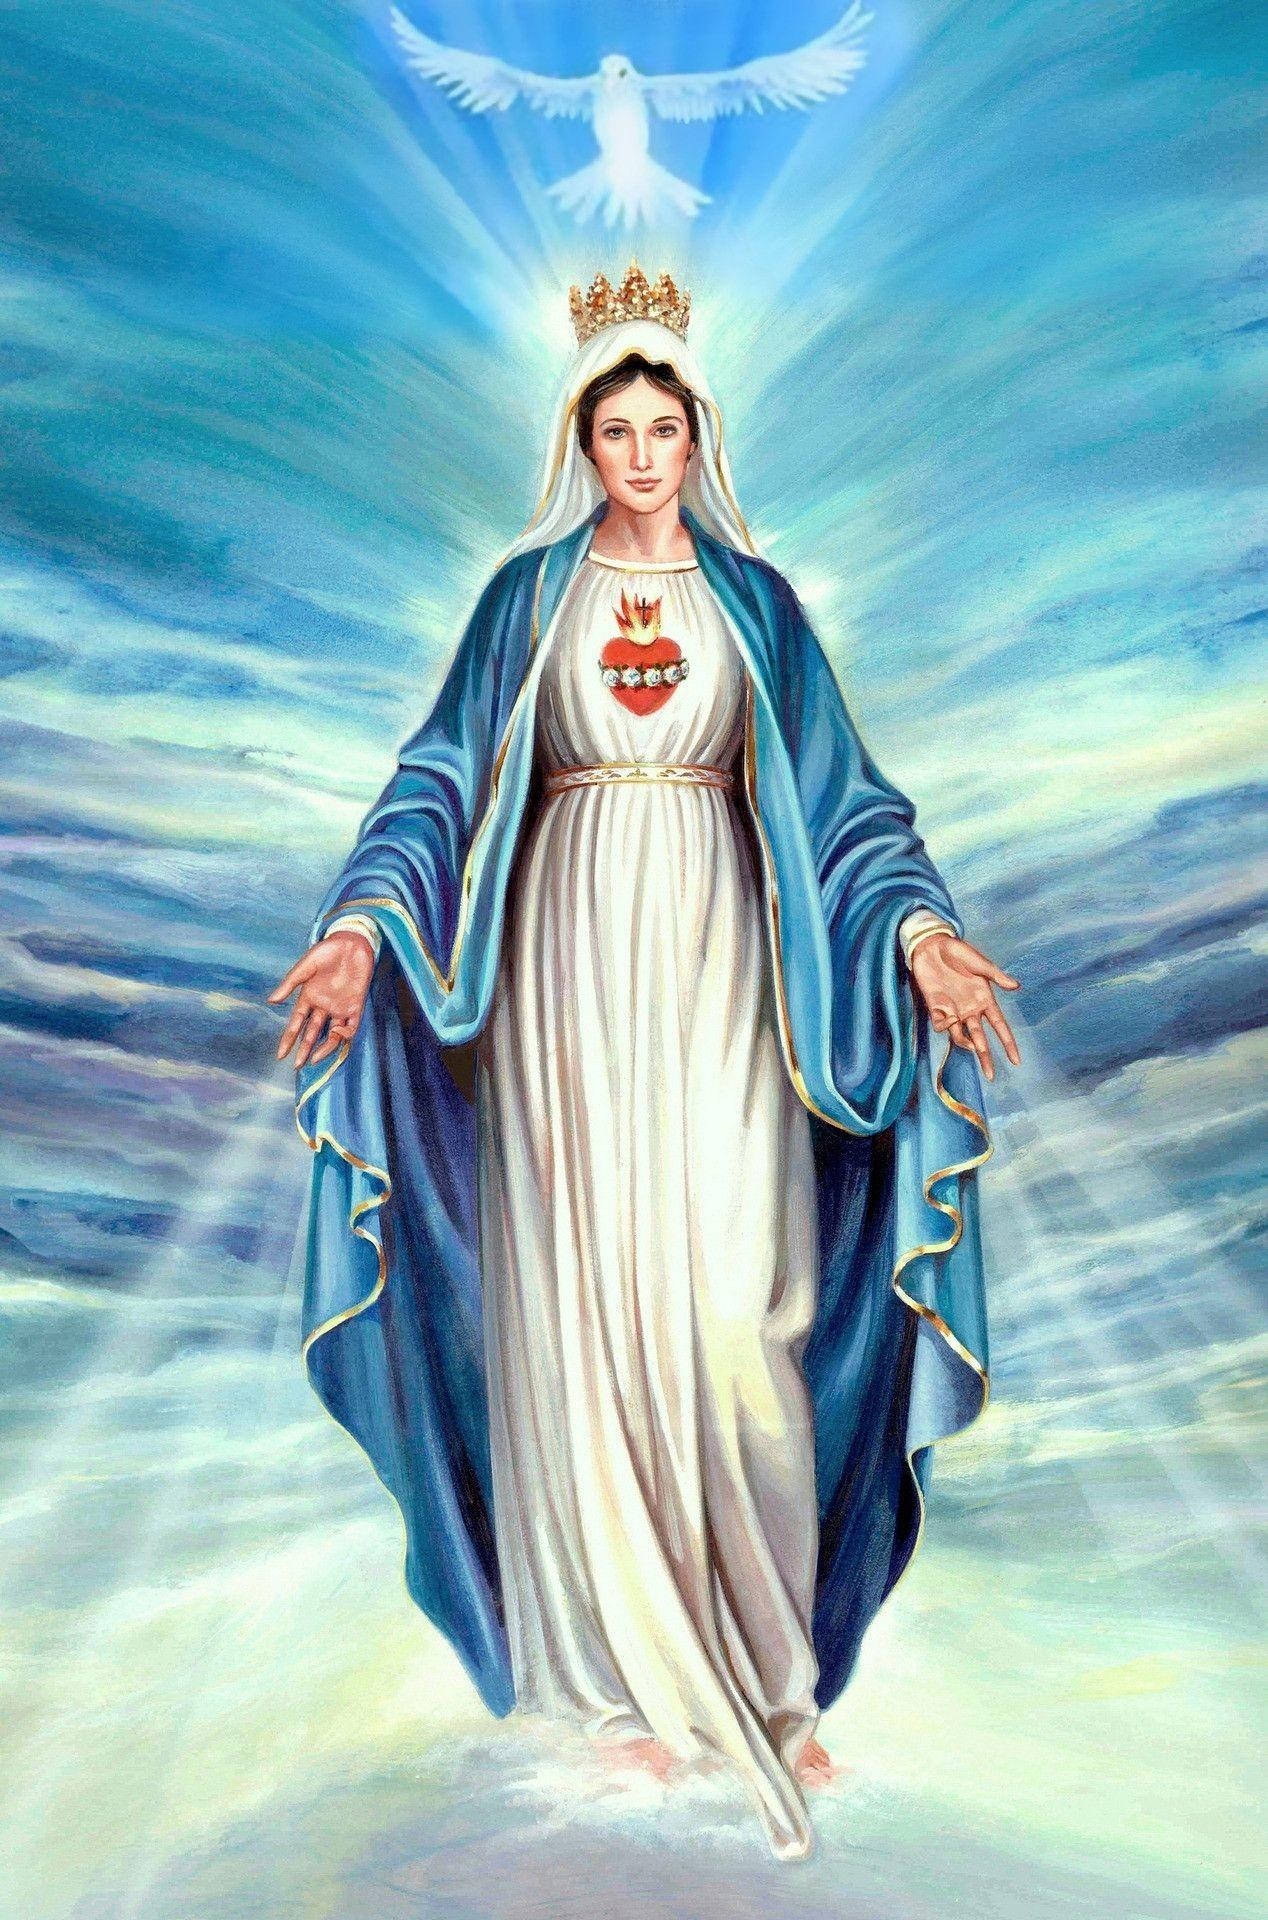 The Virgin Mary Dove Wallpaper